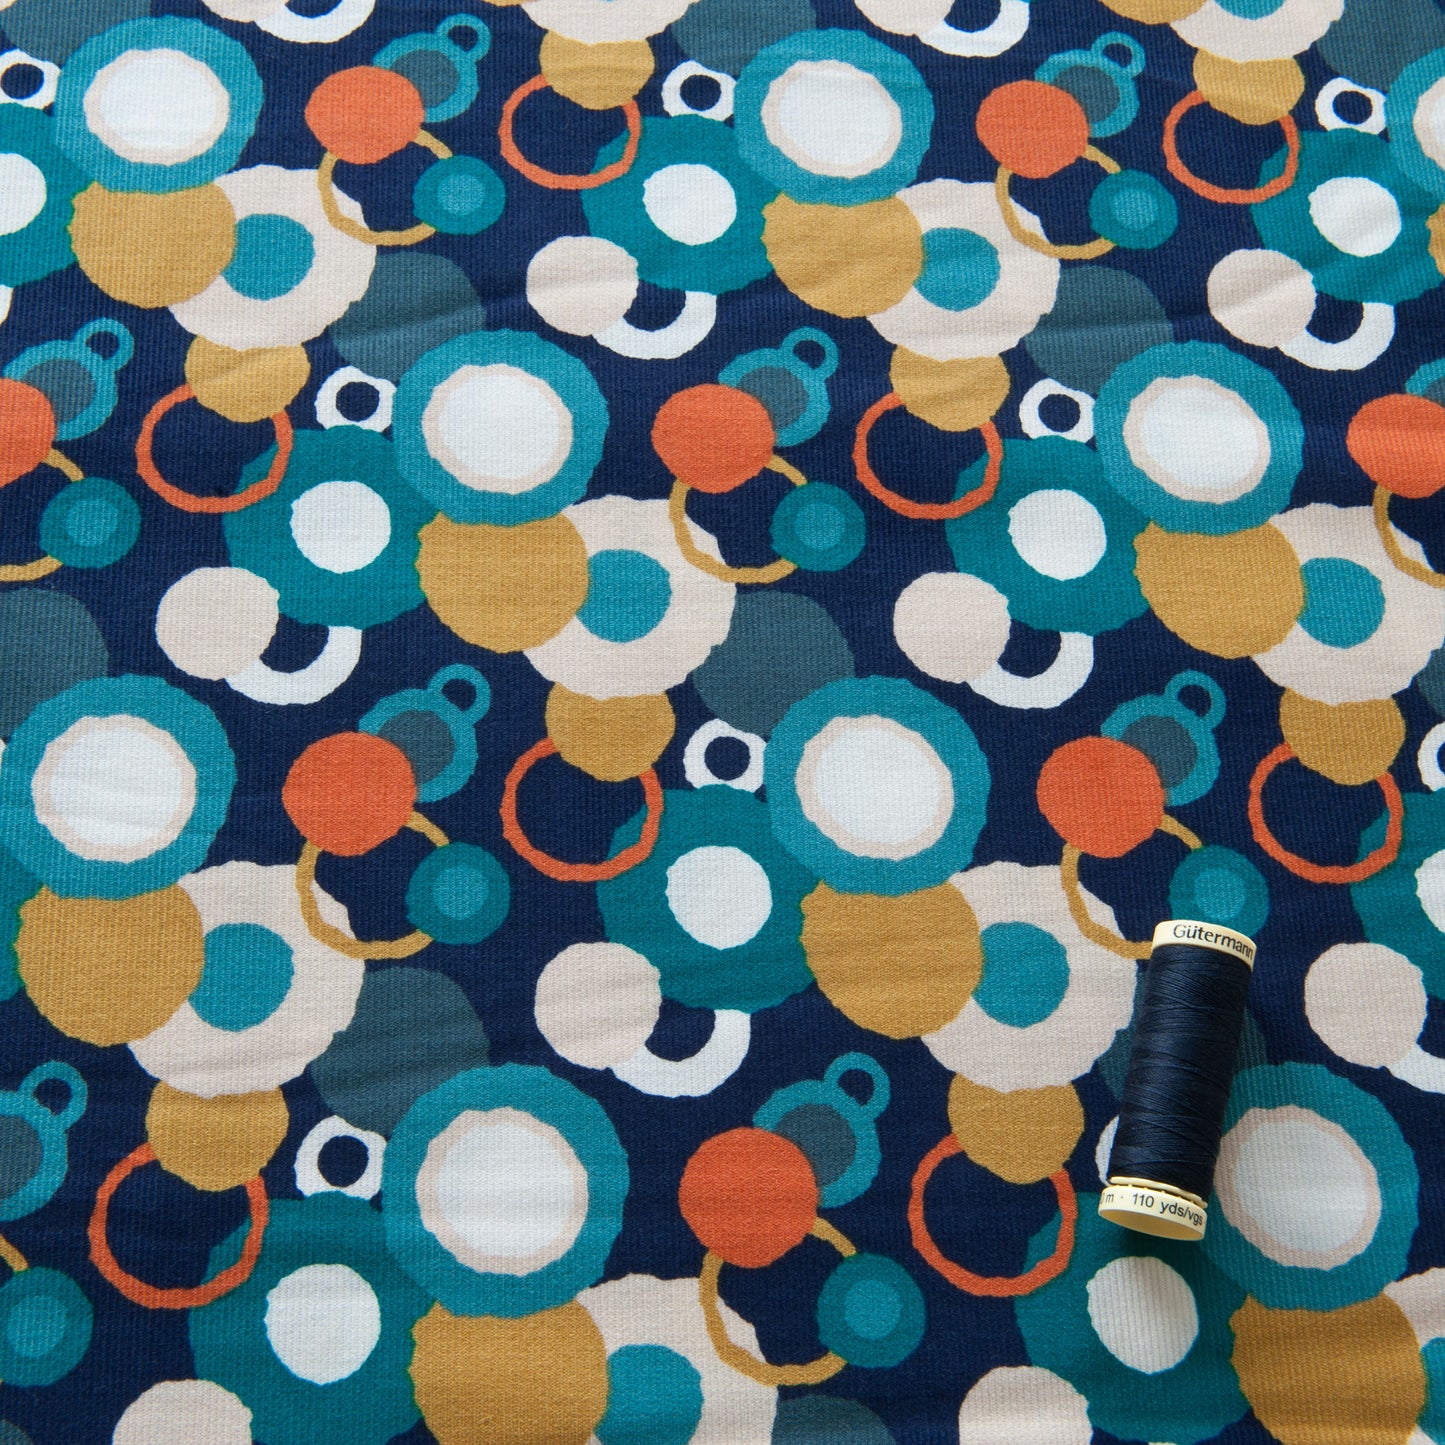 Circles Needlecord Fabric in Teal - Dashwood Studio / Sholto Drumlanrig